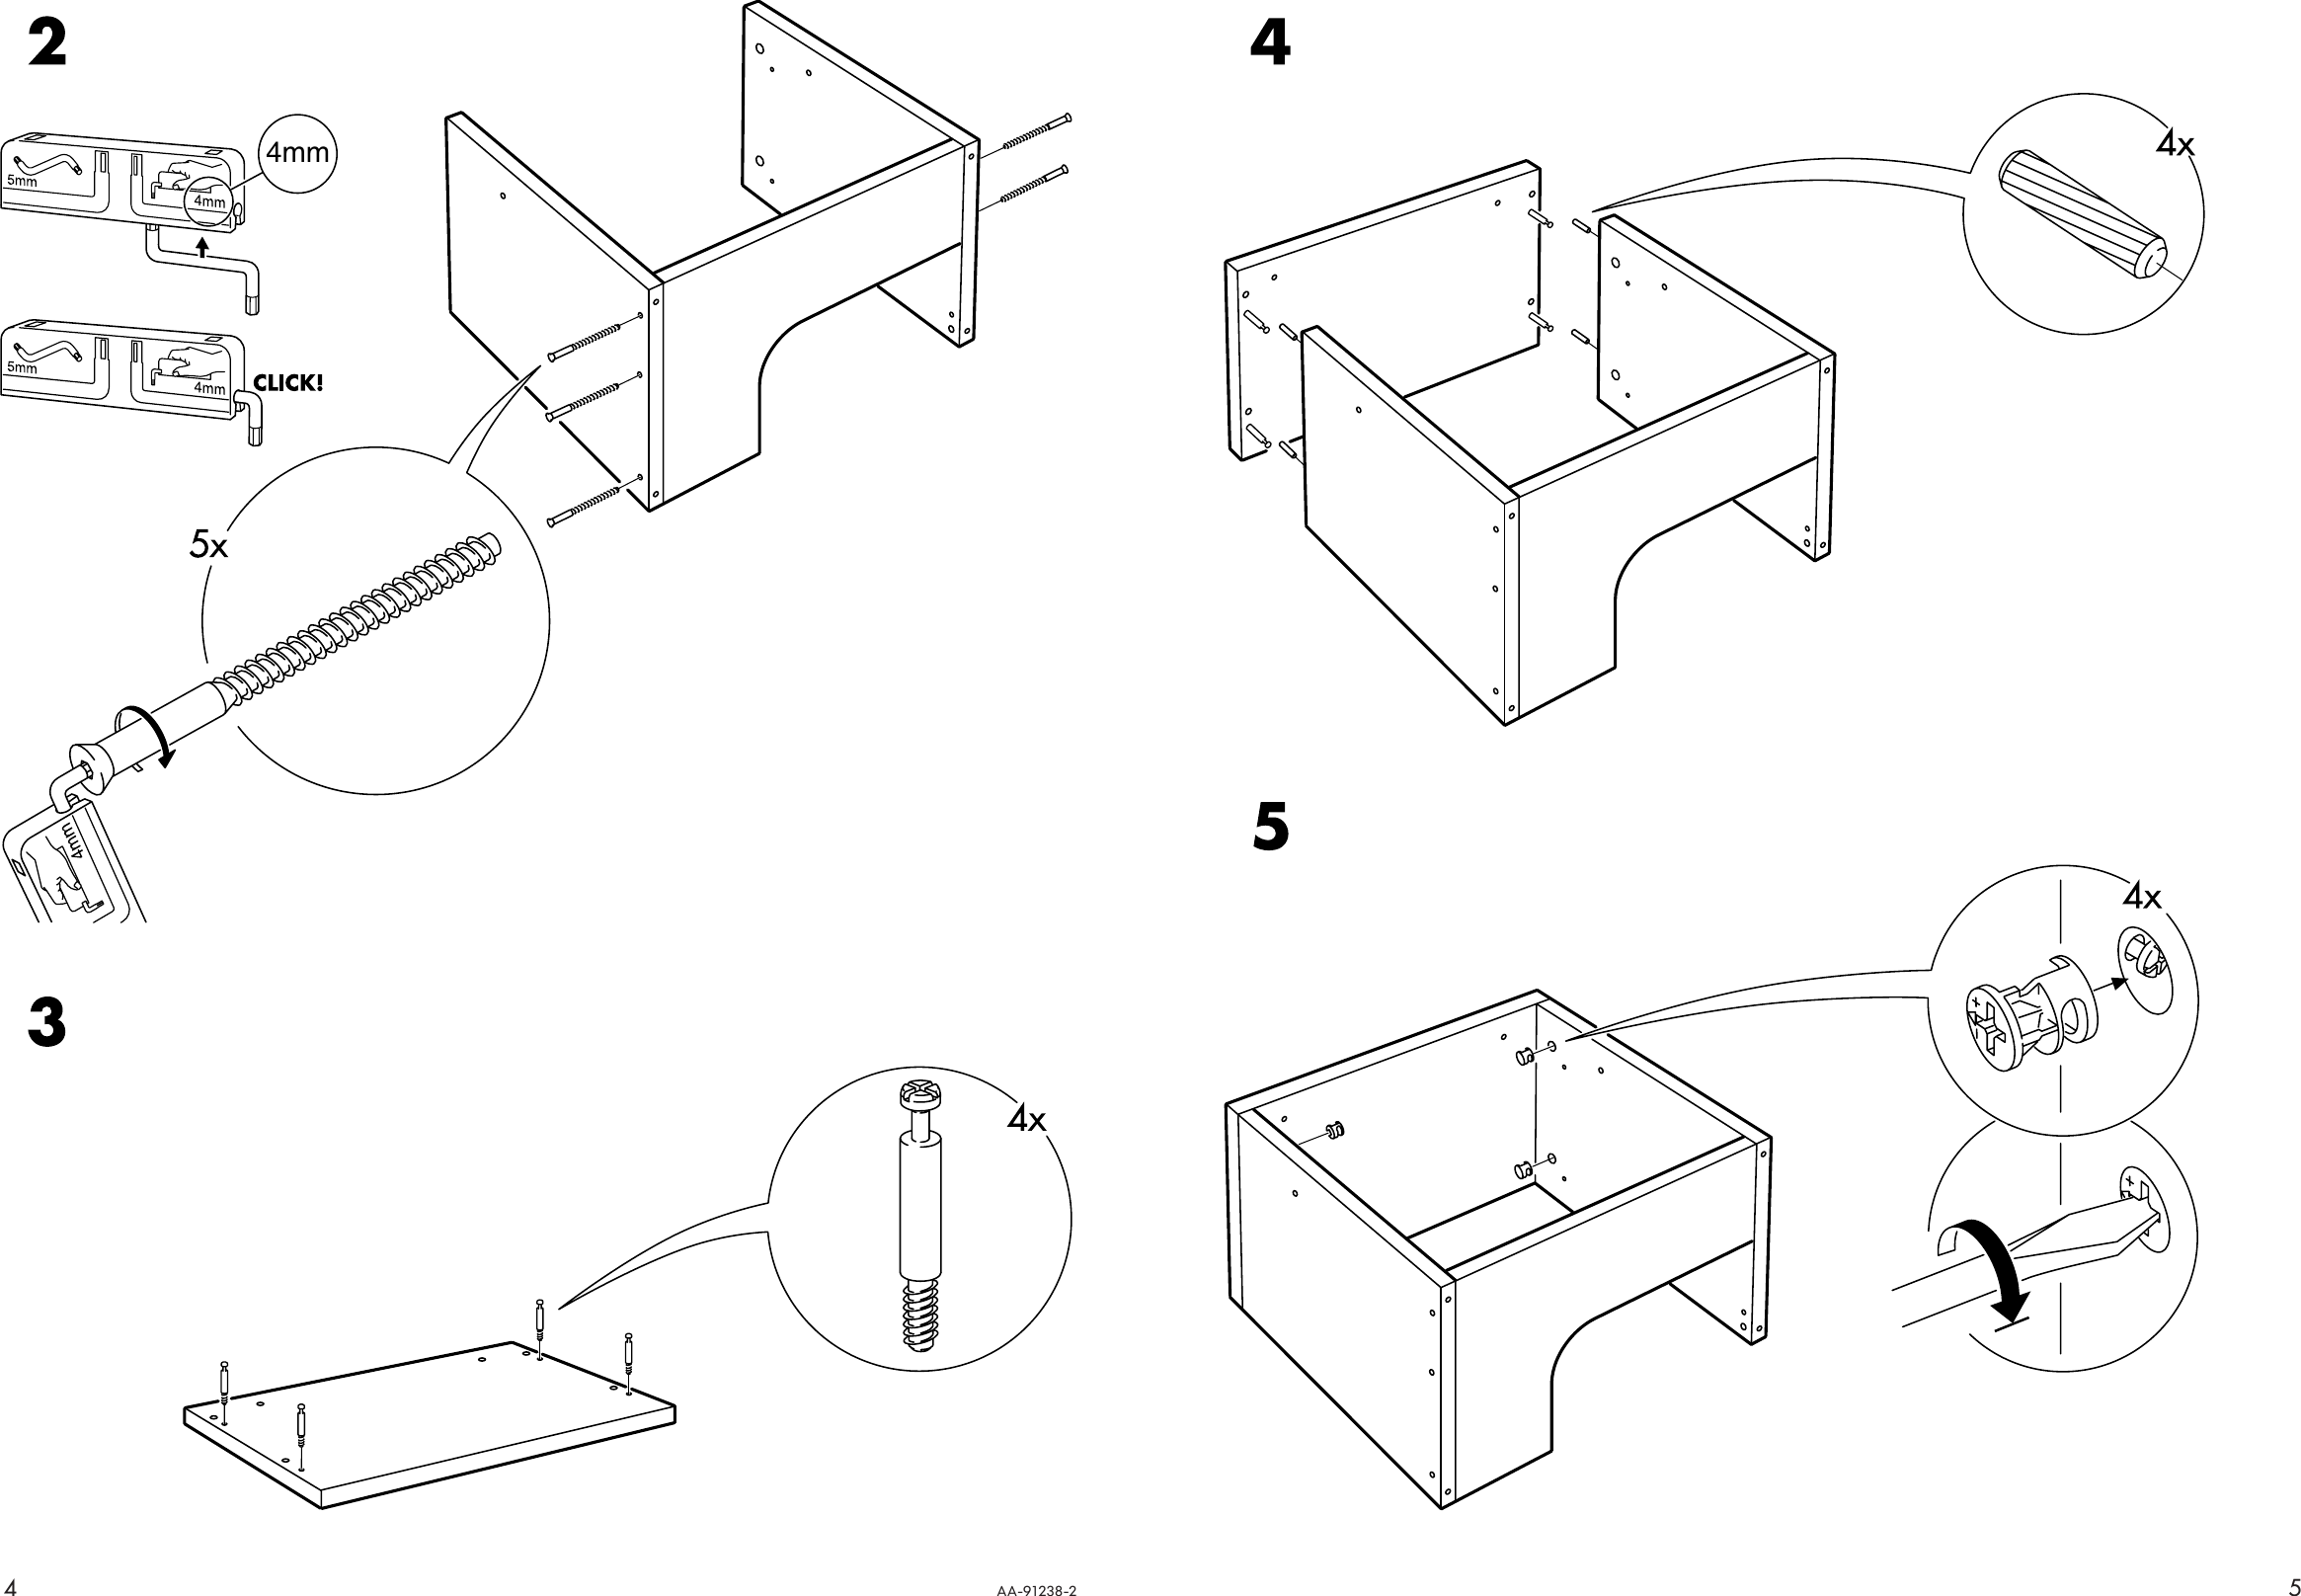 Page 4 of 4 - Ikea Ikea-Mikael-Computer-Table-W-Casters-30X20-Assembly-Instruction-6  Ikea-mikael-computer-table-w-casters-30x20-assembly-instruction